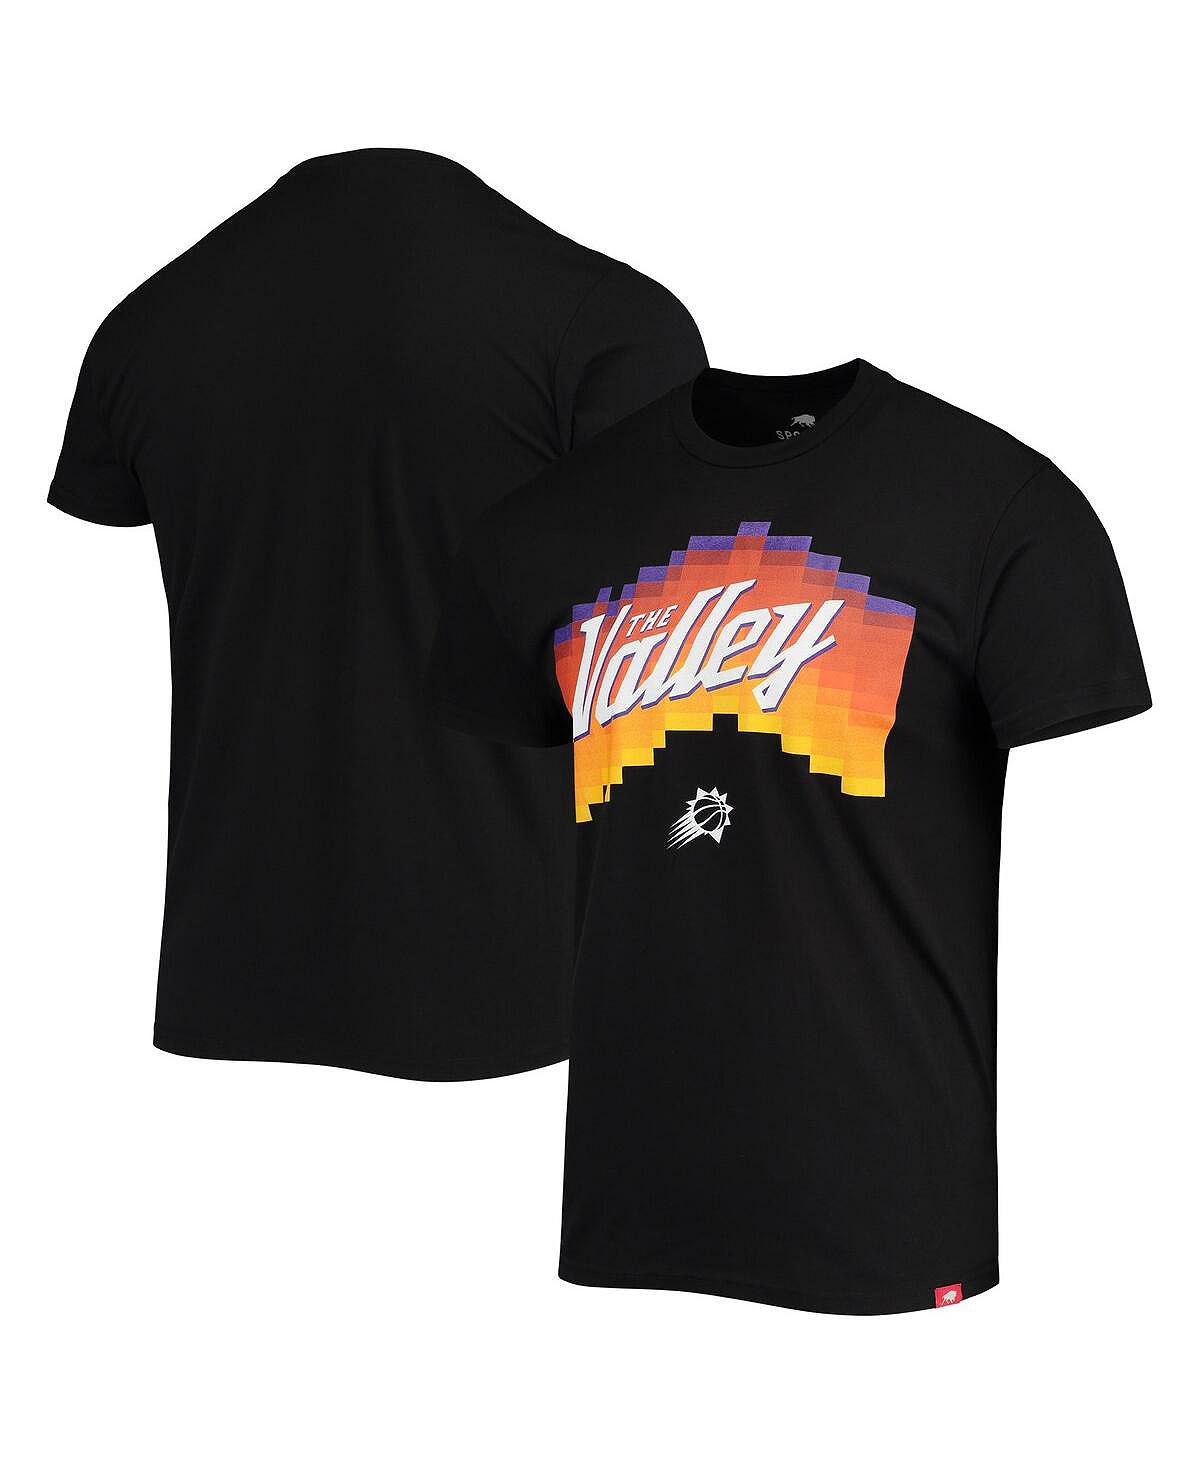 Мужская черная футболка phoenix suns the valley pixel city edition tri-blend Sportiqe, черный